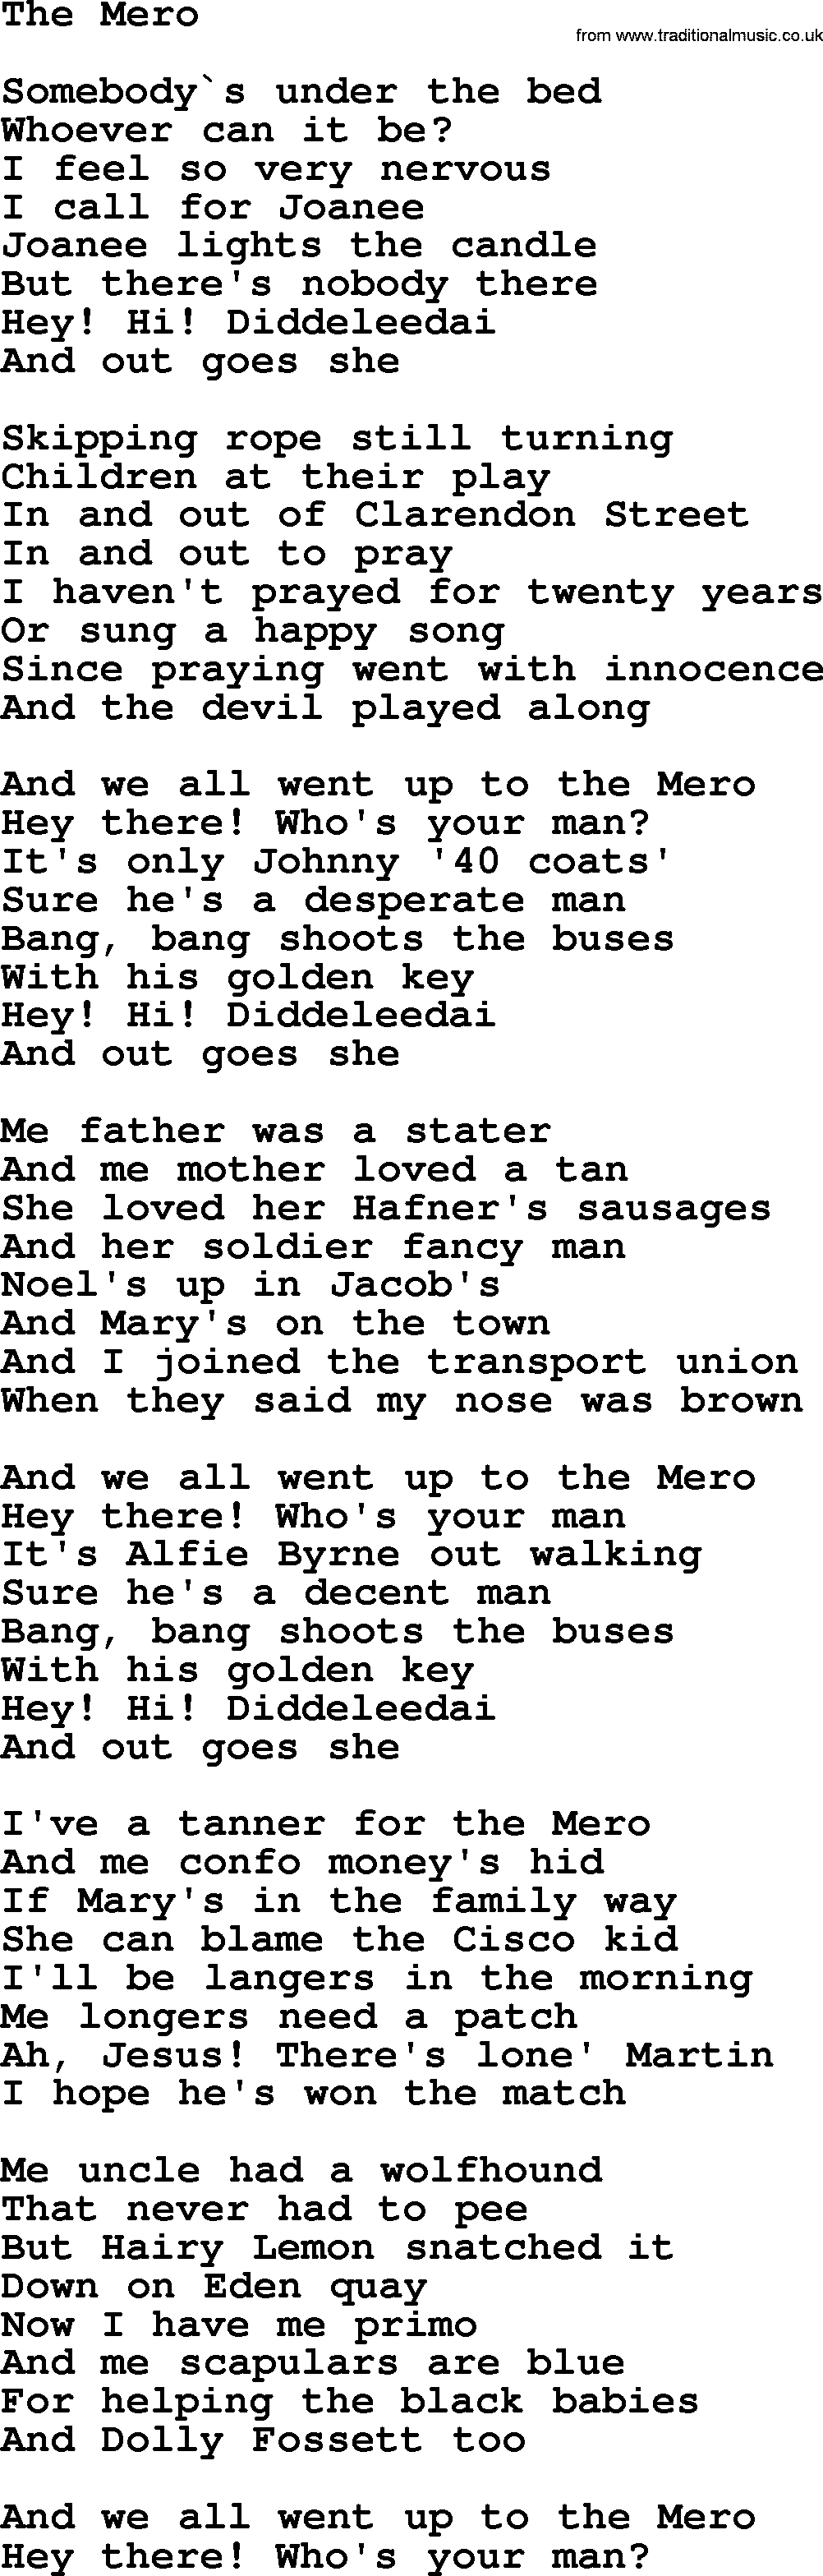 The Dubliners song: The Mero, lyrics